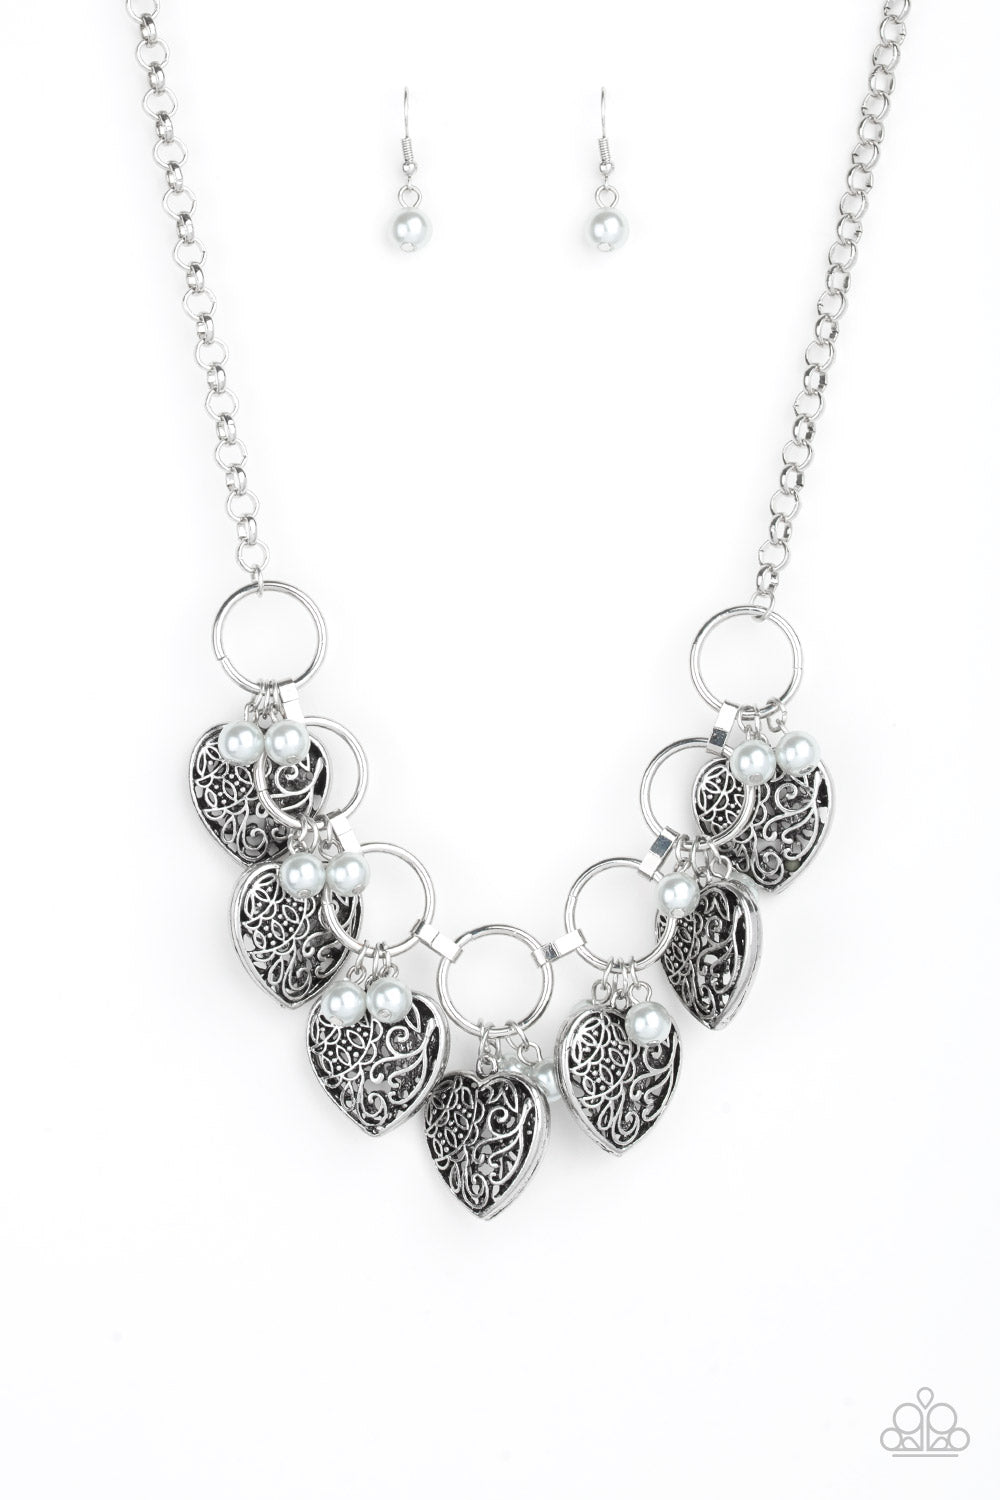 Very Valentine - Silver Necklace freeshipping - JewLz4u Gemstone Gallery